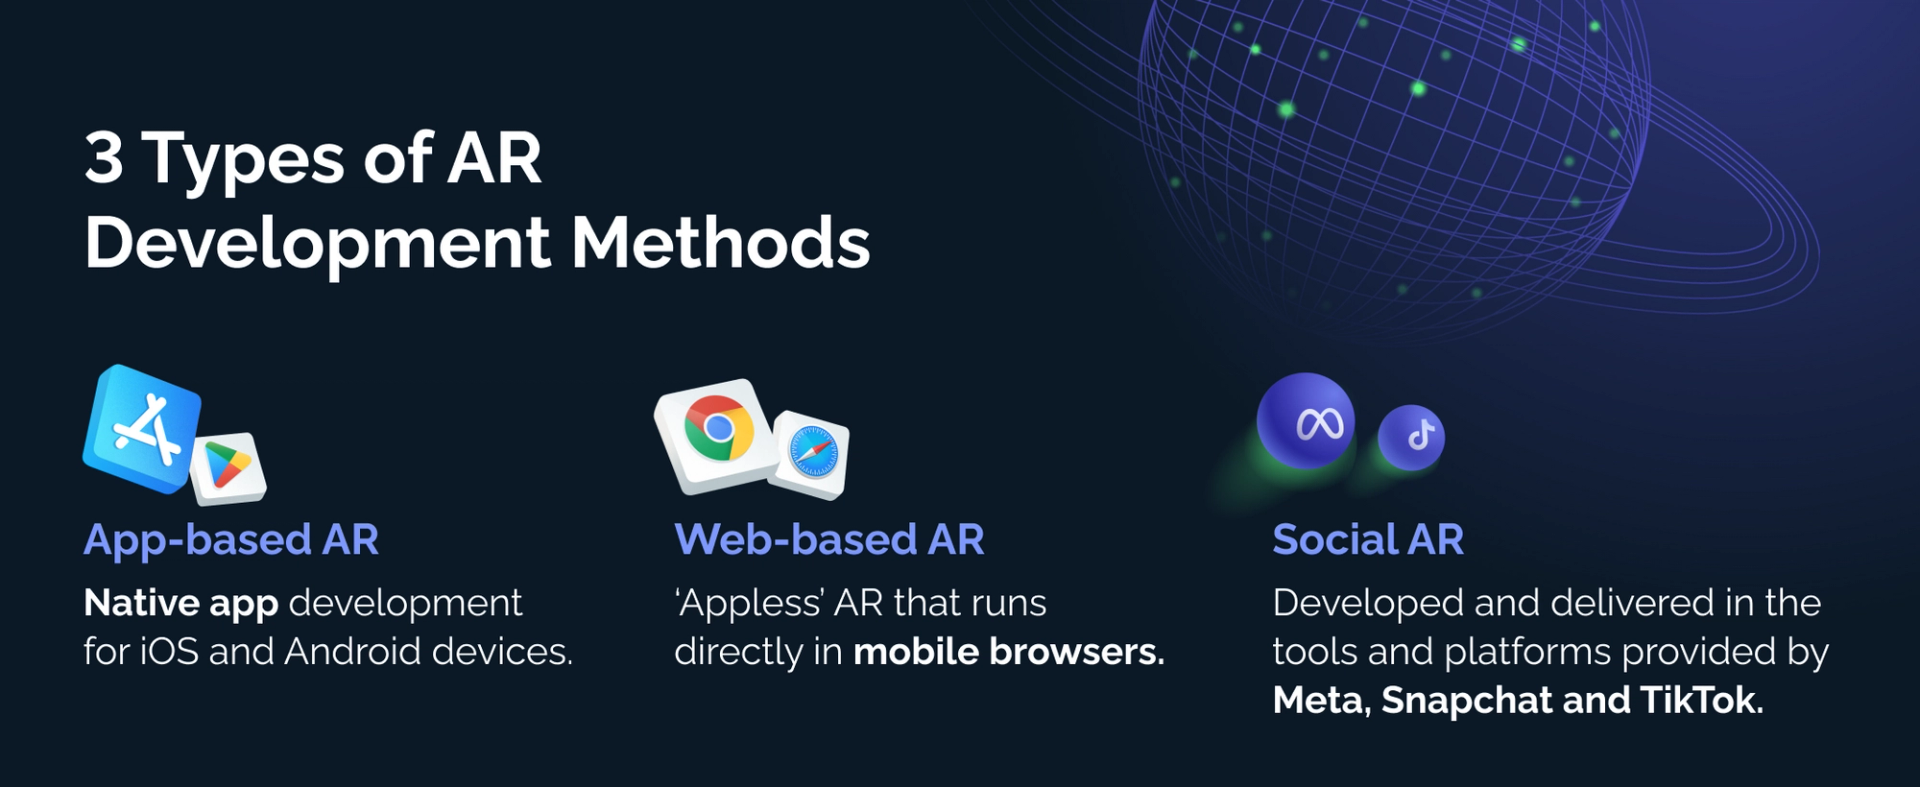 3 types of AR development methods